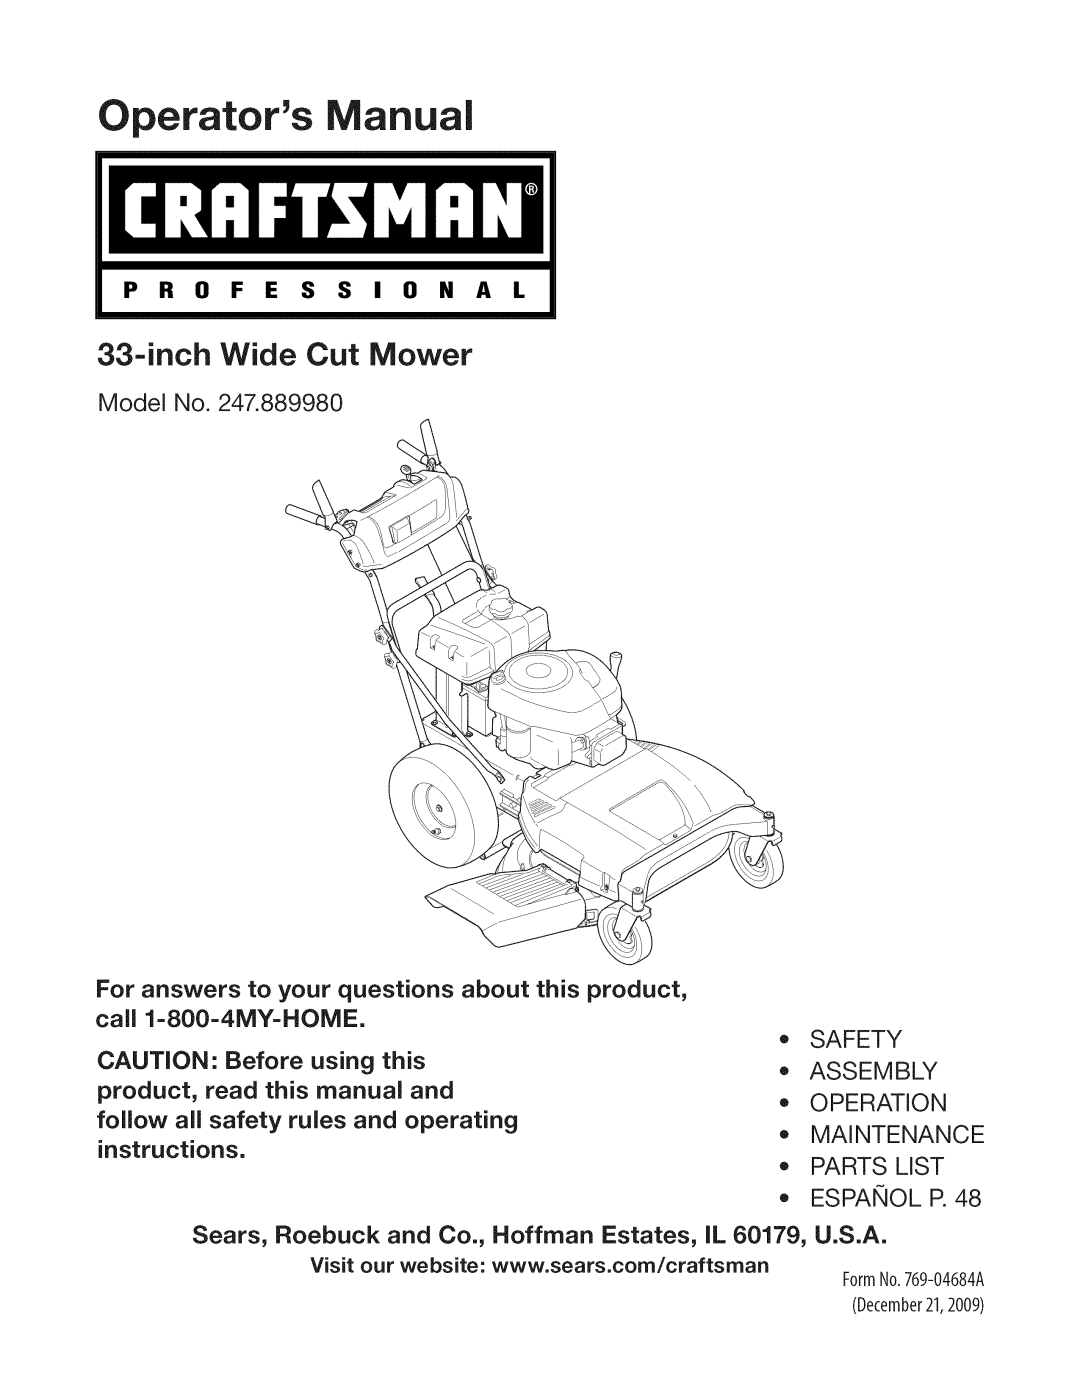 Craftsman 247.889980 manual perators, instructions, Sears, Roebuck and Co., Hoffman Estates, IL, U.S.A, inchWide Cut Mower 